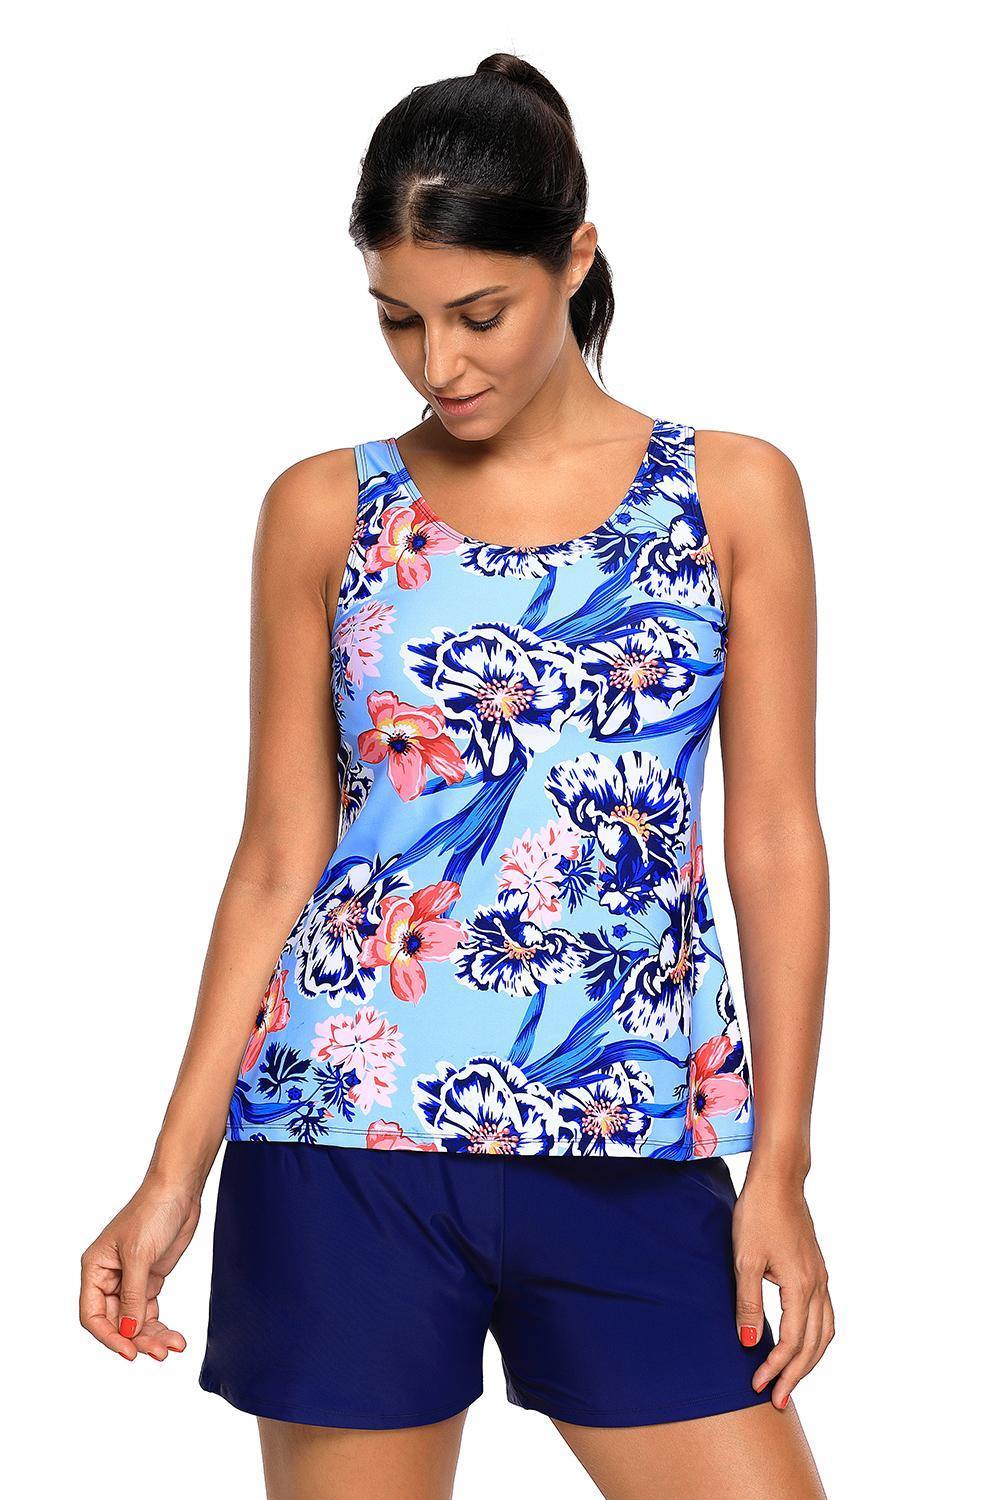 Black Floral Print Tankini and Short Swimsuit - L & M Kee, LLC